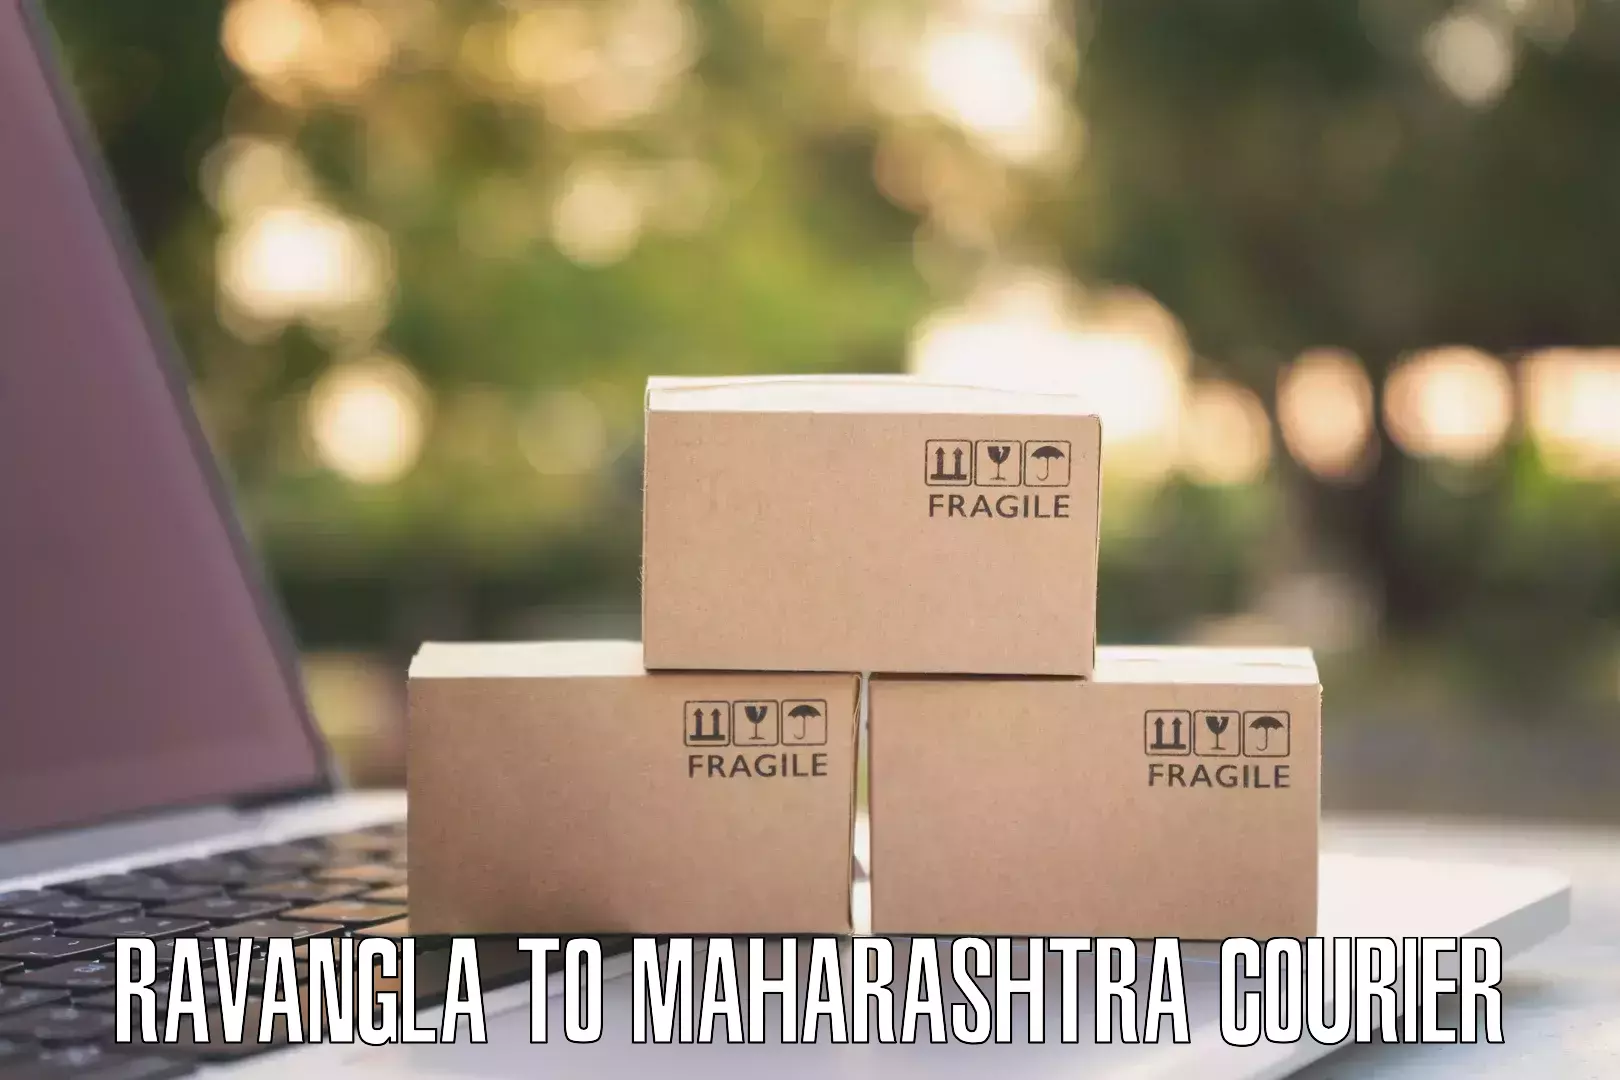 Smart logistics strategies Ravangla to Maharashtra